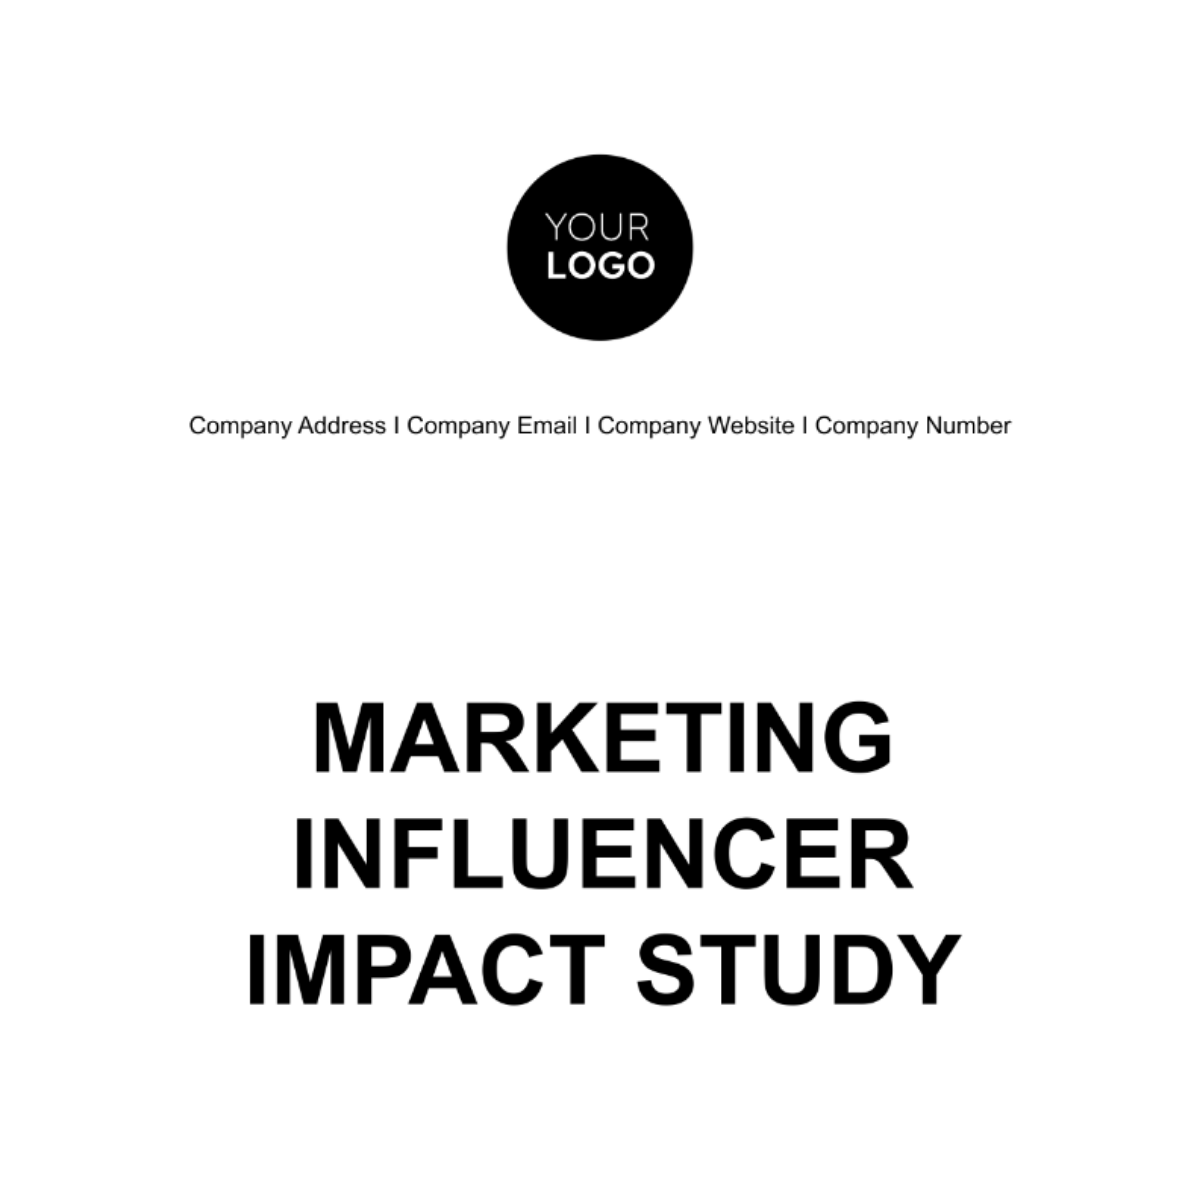 Marketing Influencer Impact Study Template